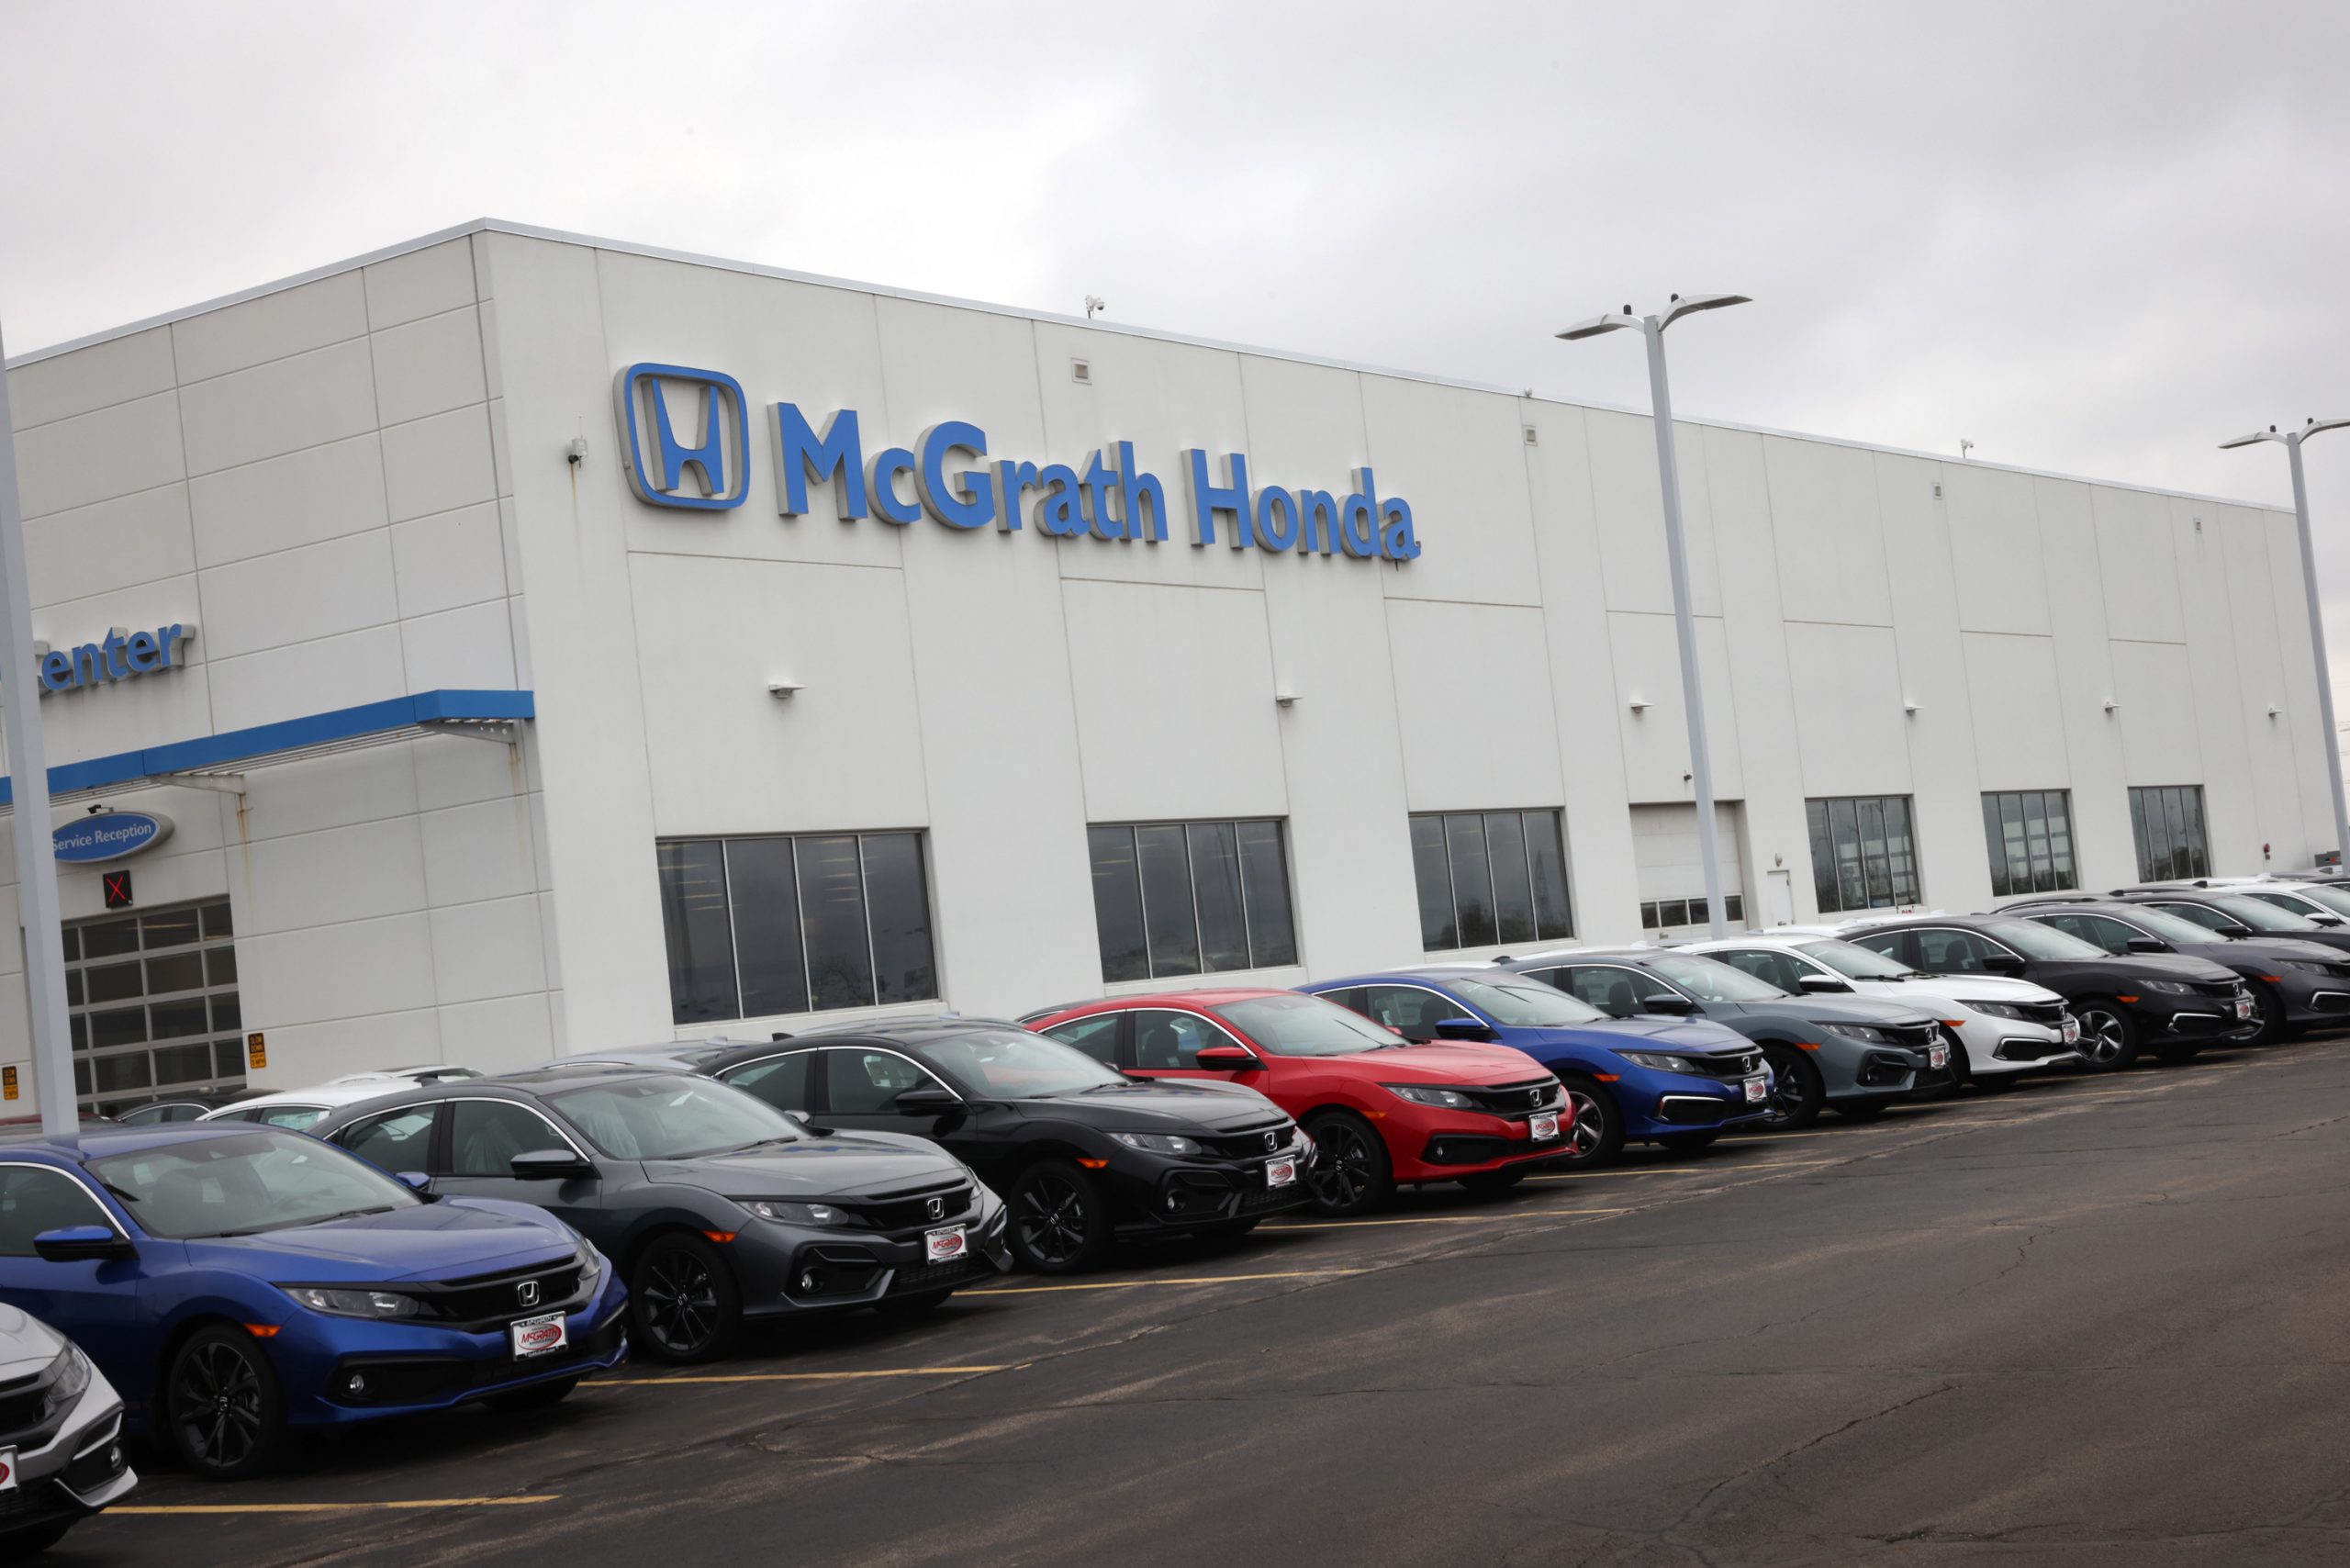 A row of Civic models on a Honda dealership lot